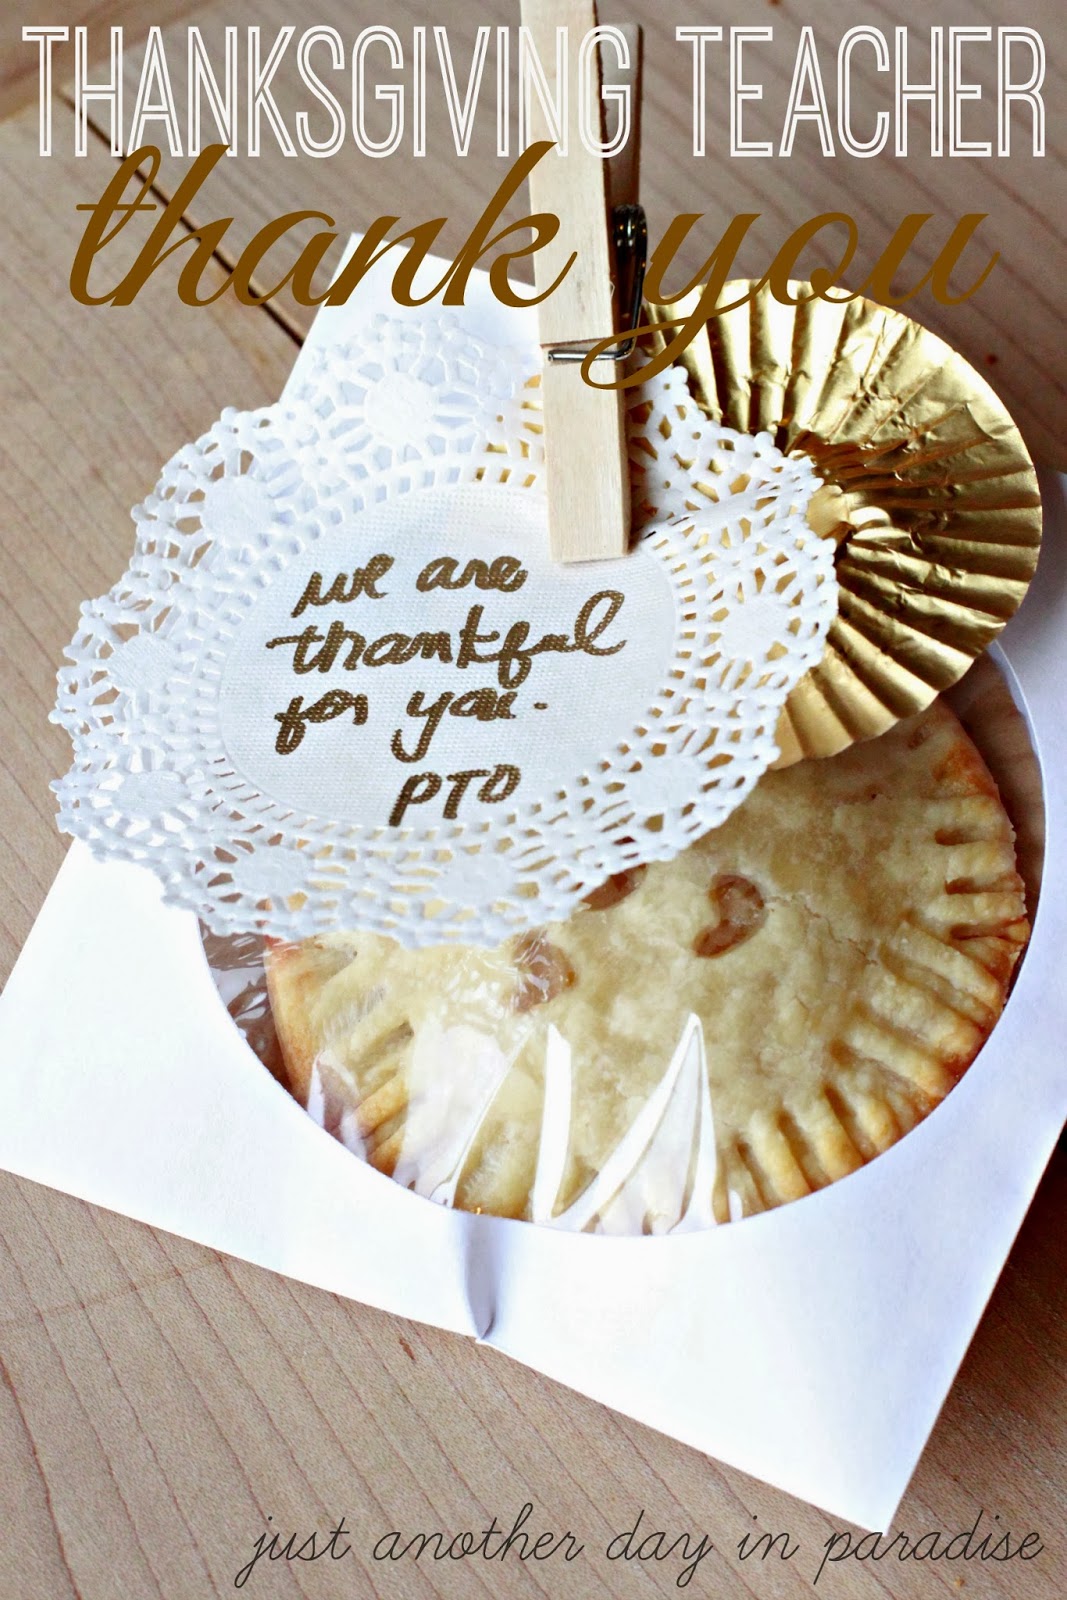 larissa-another-day-thanksgiving-teacher-gift-hand-pies